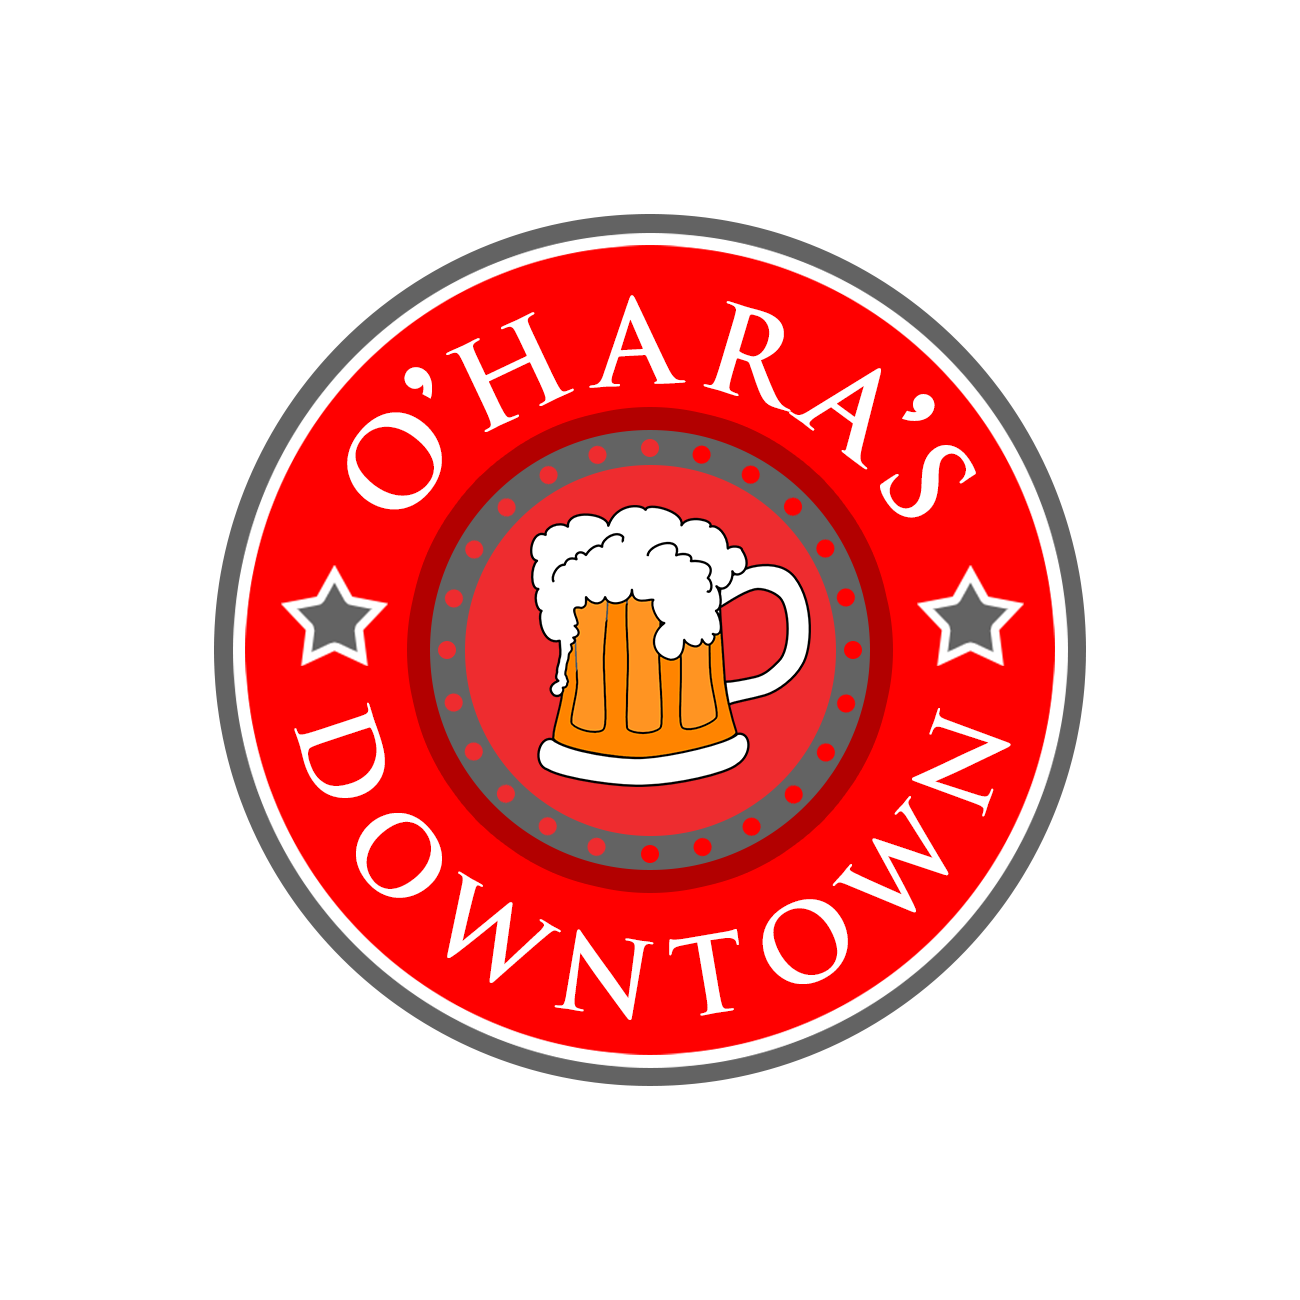 Oharas Bar & Grill